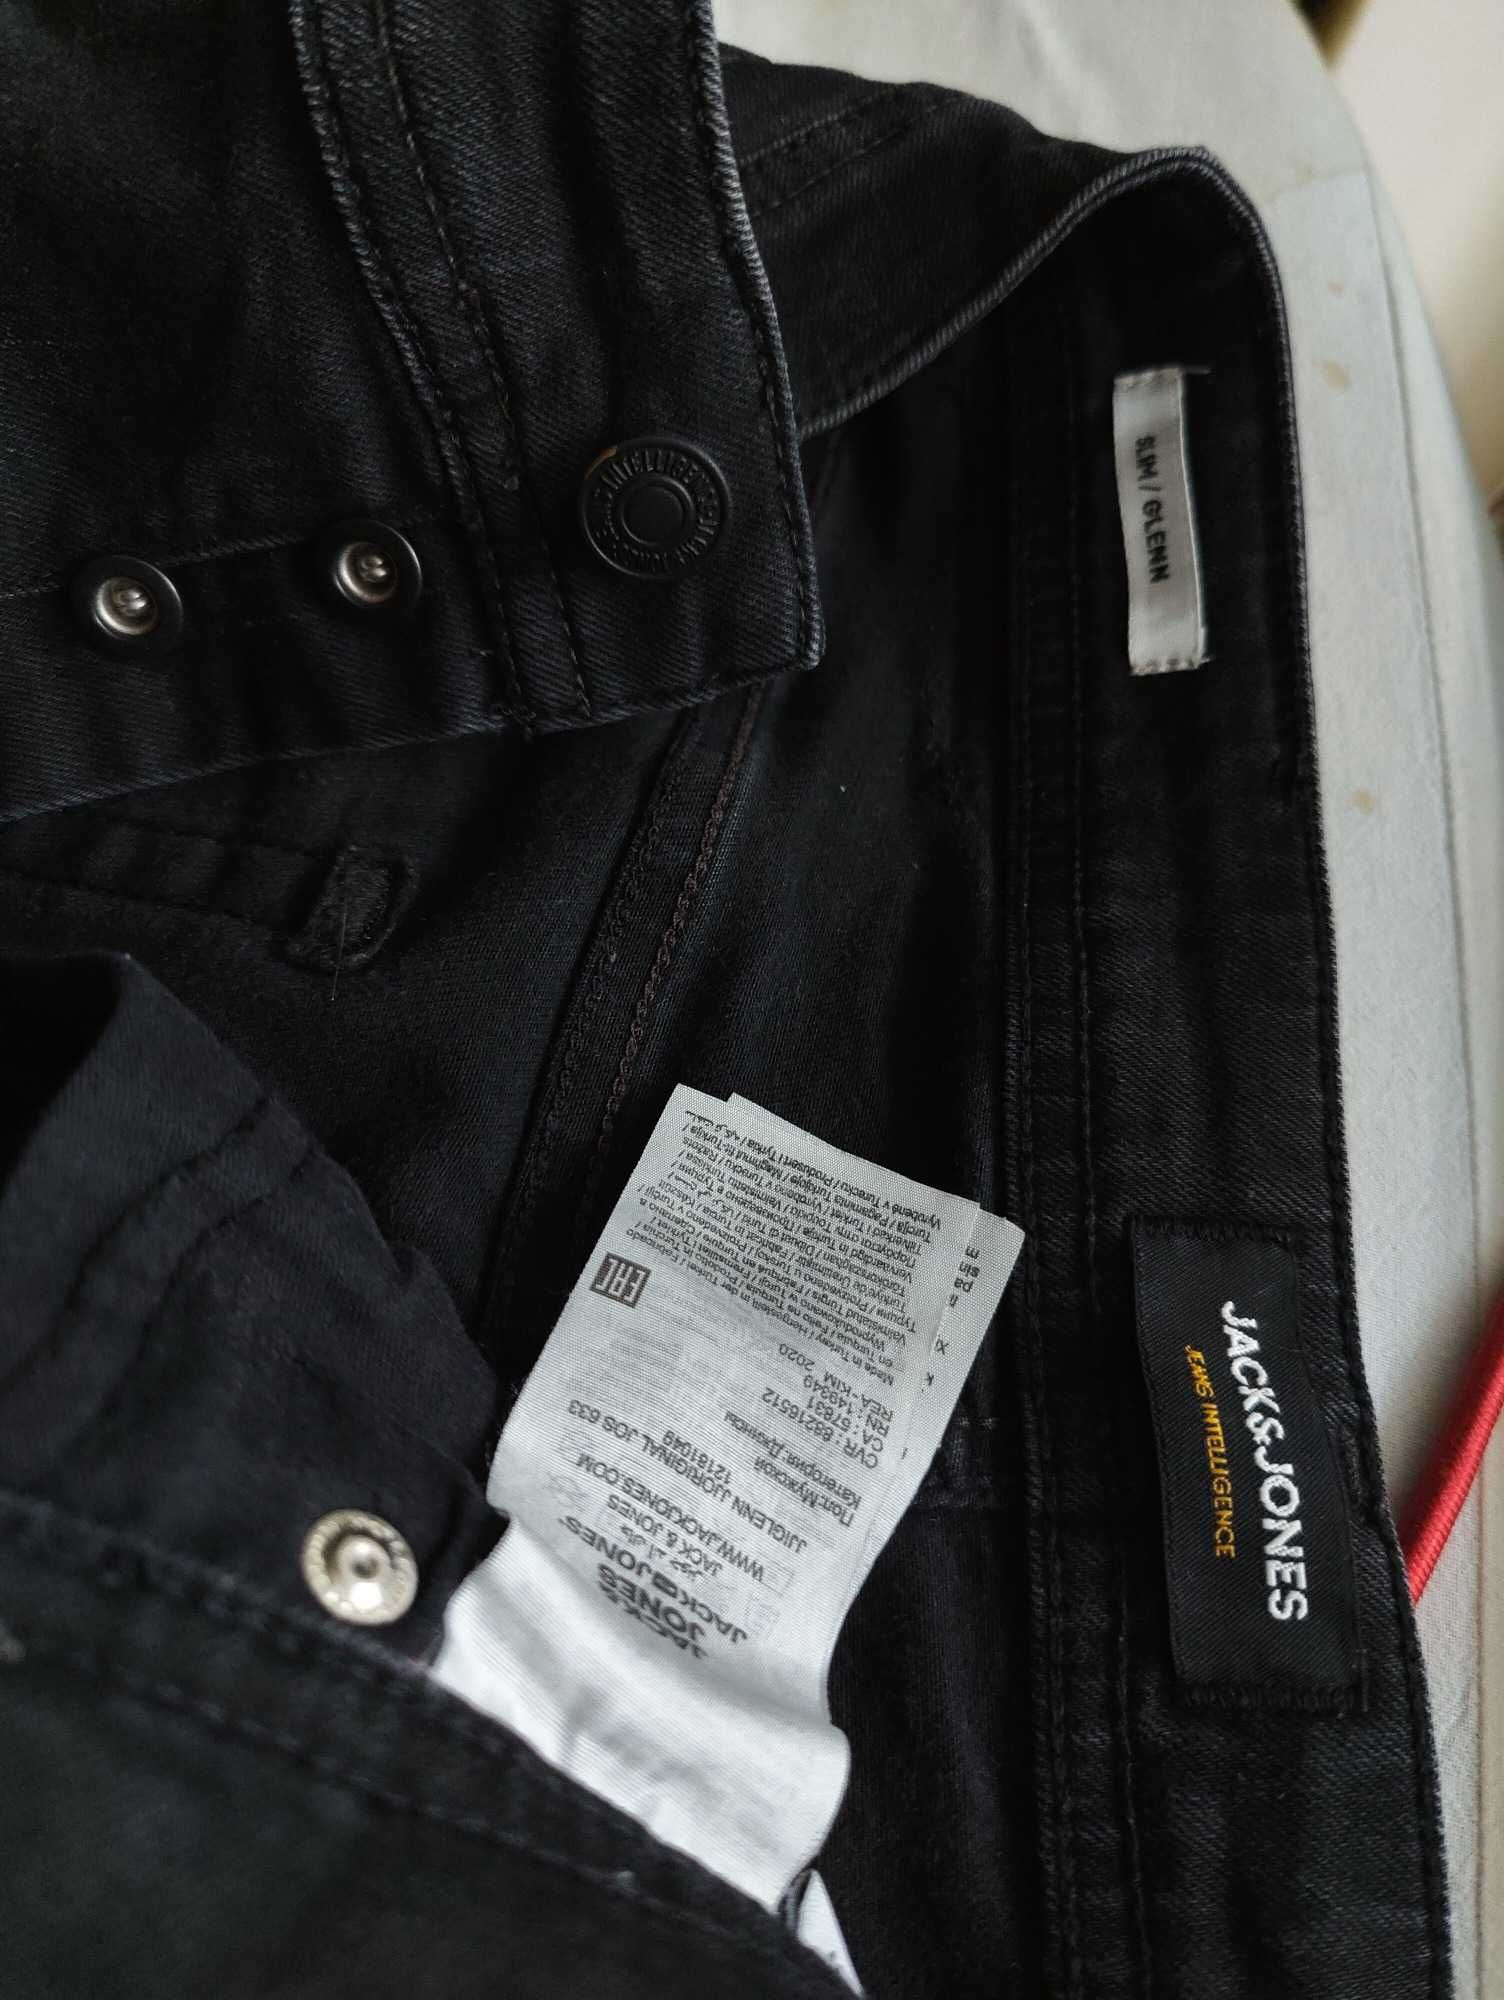 Джинсы Jack&jones Glenn jeans Дания w31 stretch grey.